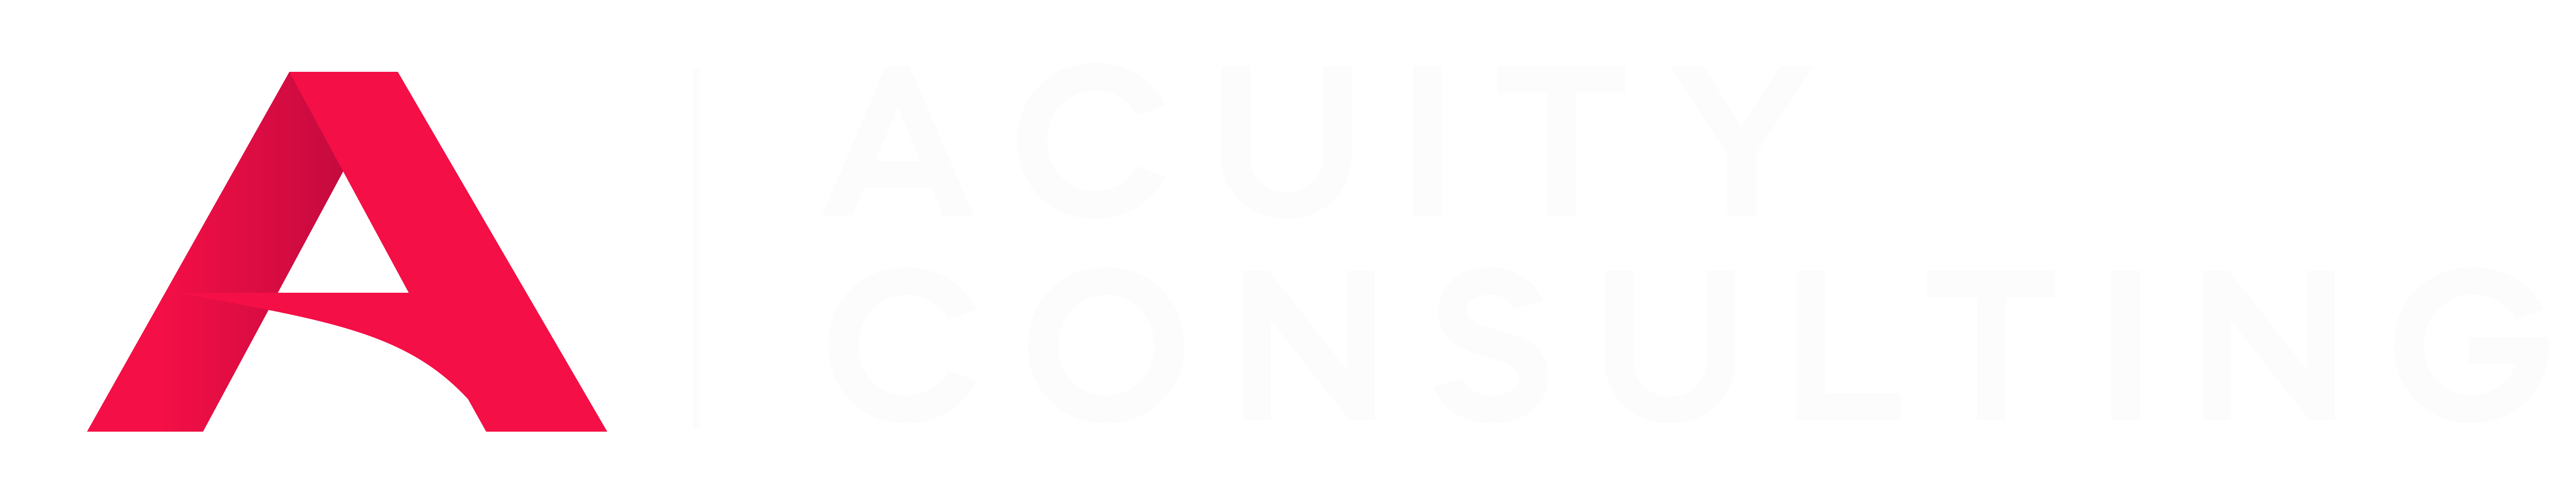 Acuity logo white